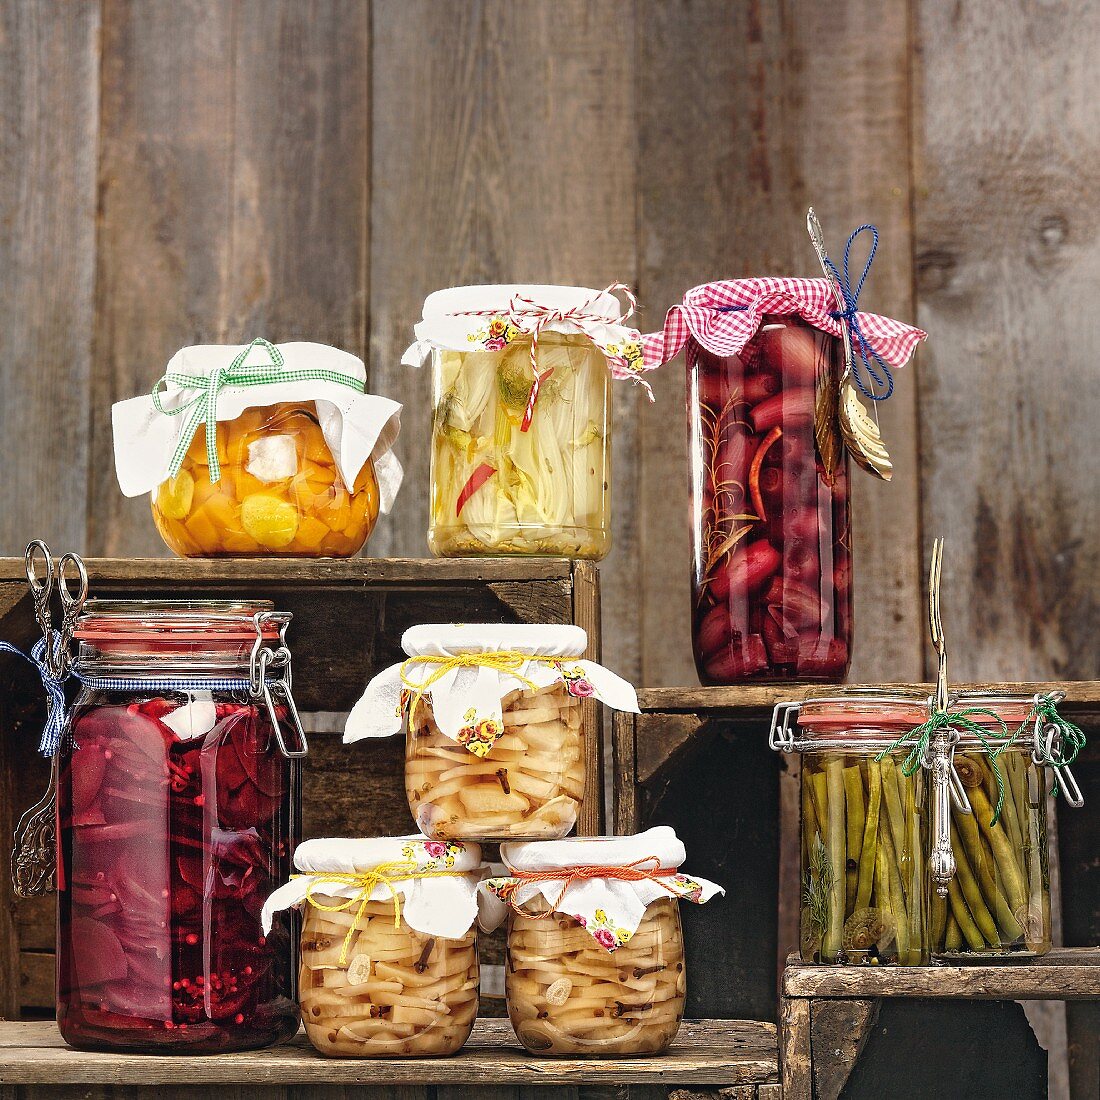 Vegetables preserved in jars